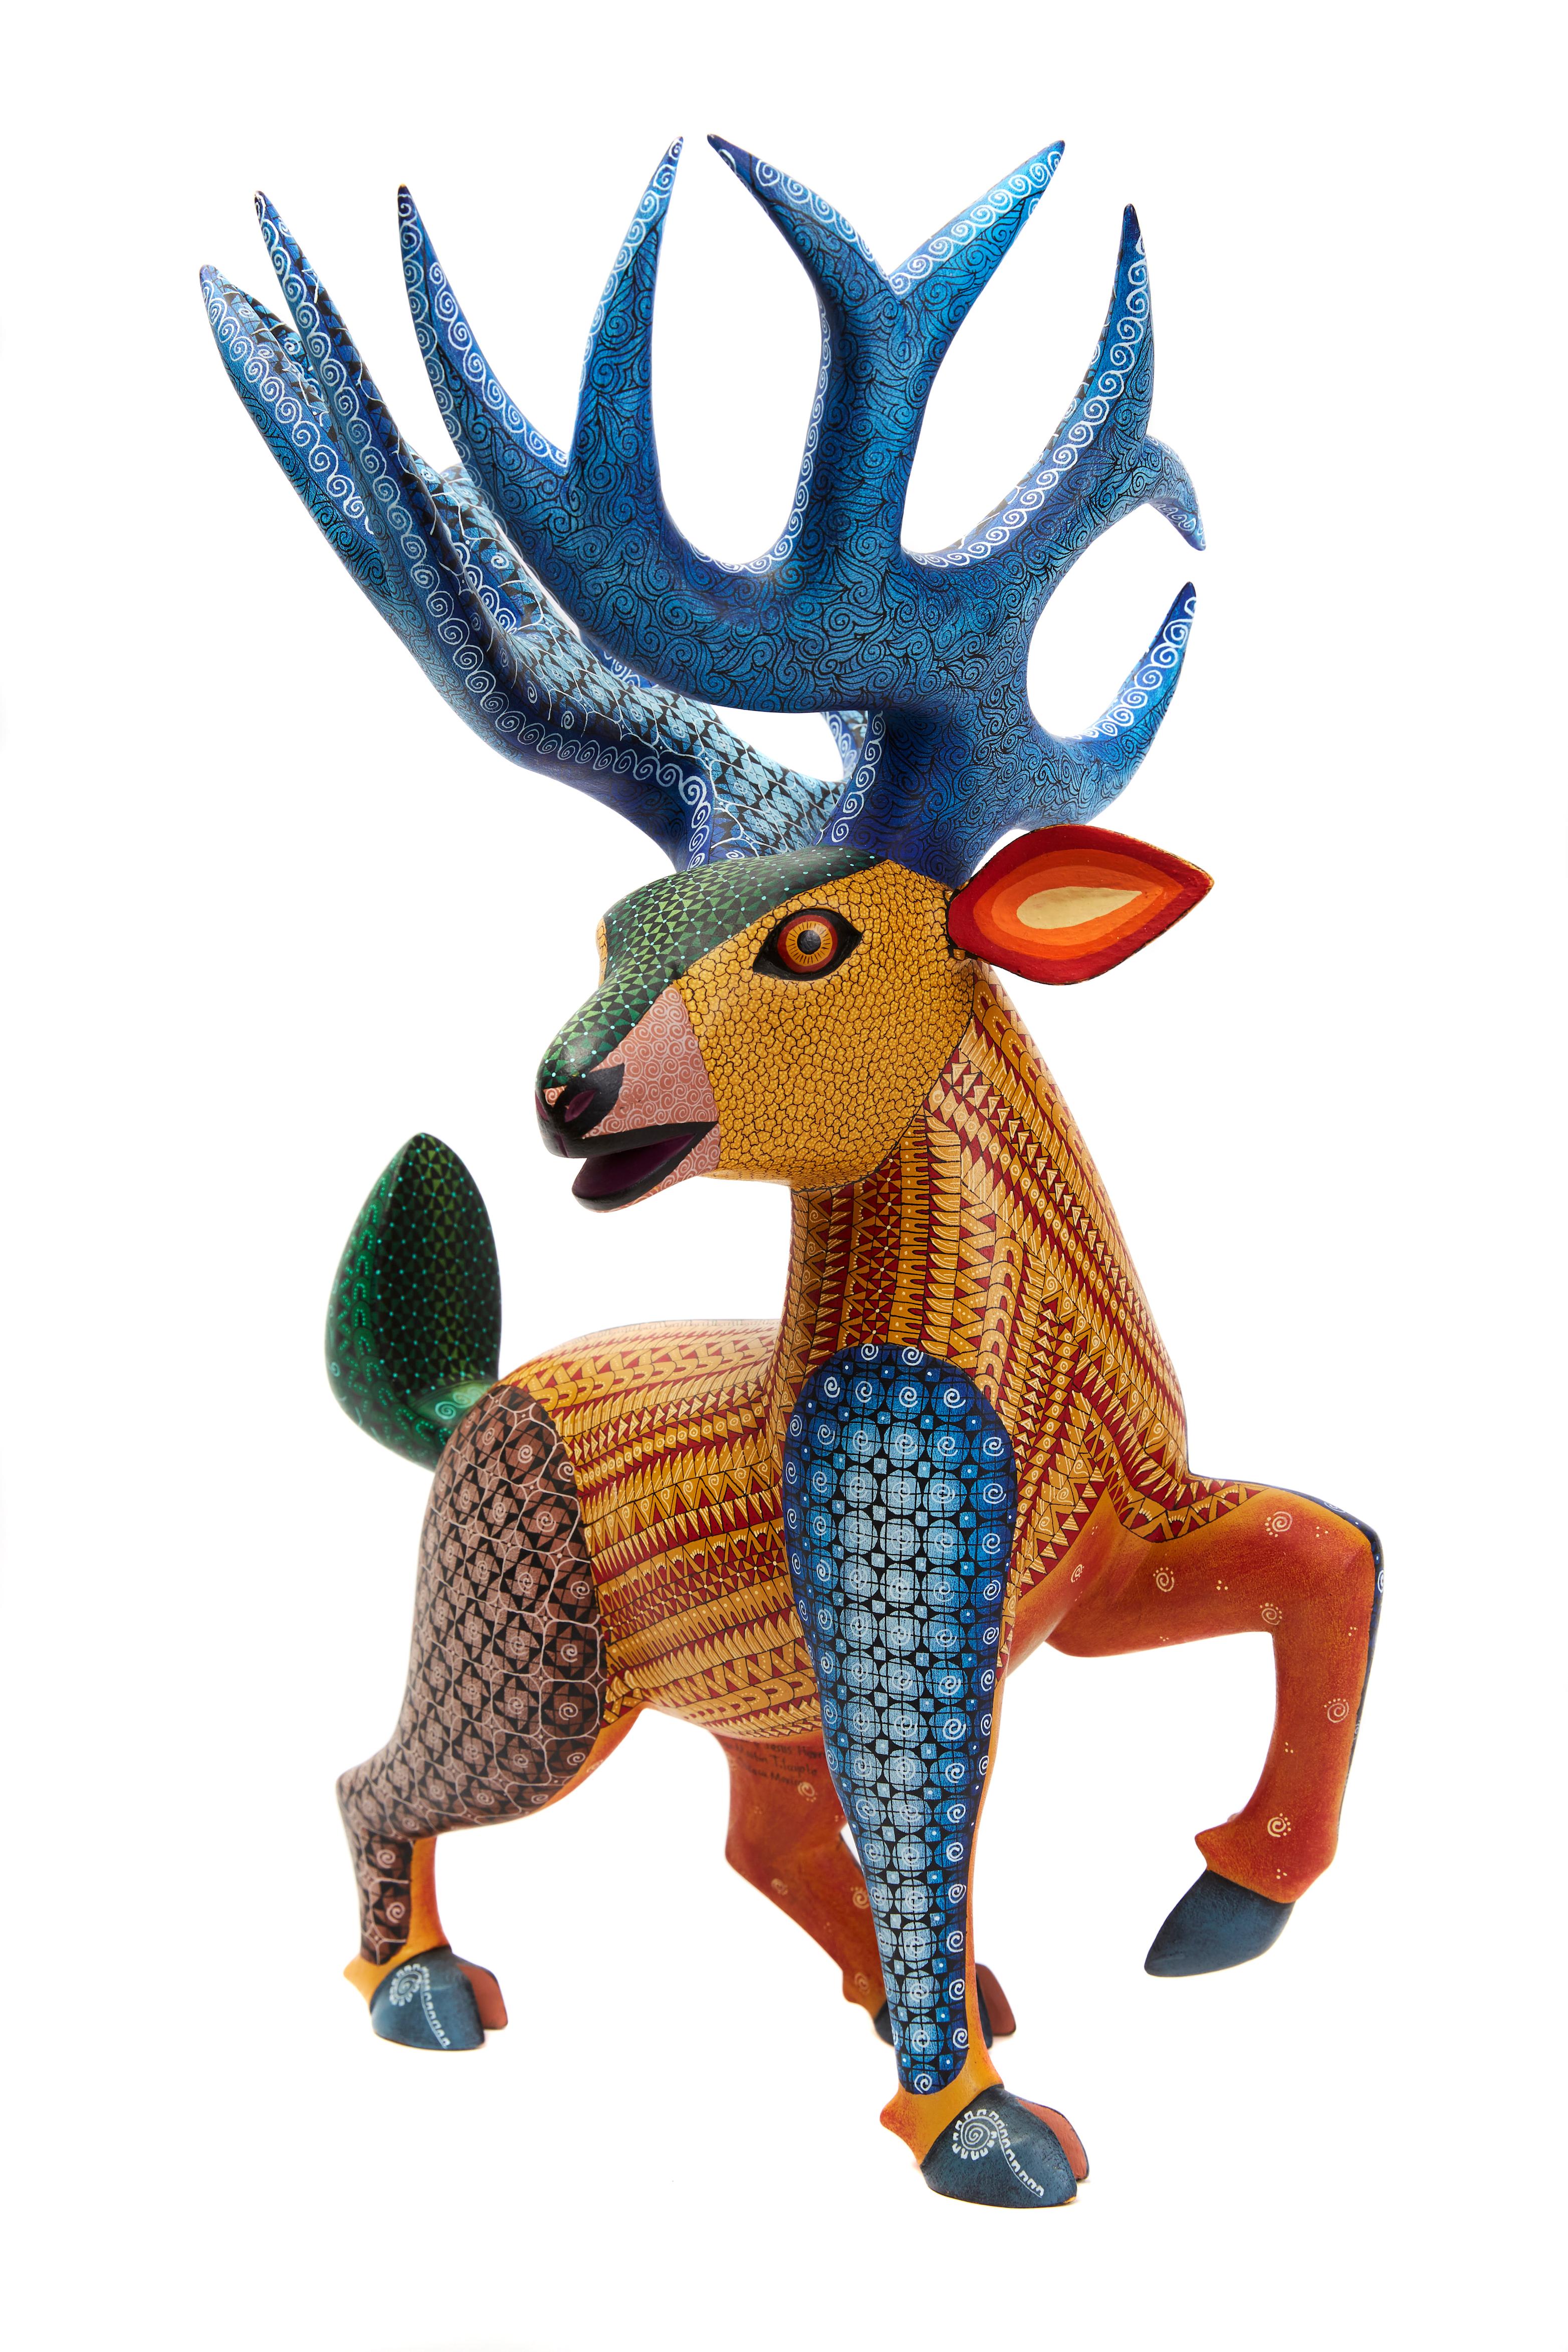 Venado, Deer,  Mexican Alebrije, Mexican Folk Art, Oaxaca Wood Carving - Sculpture by Roxana y Jesus Hernandez